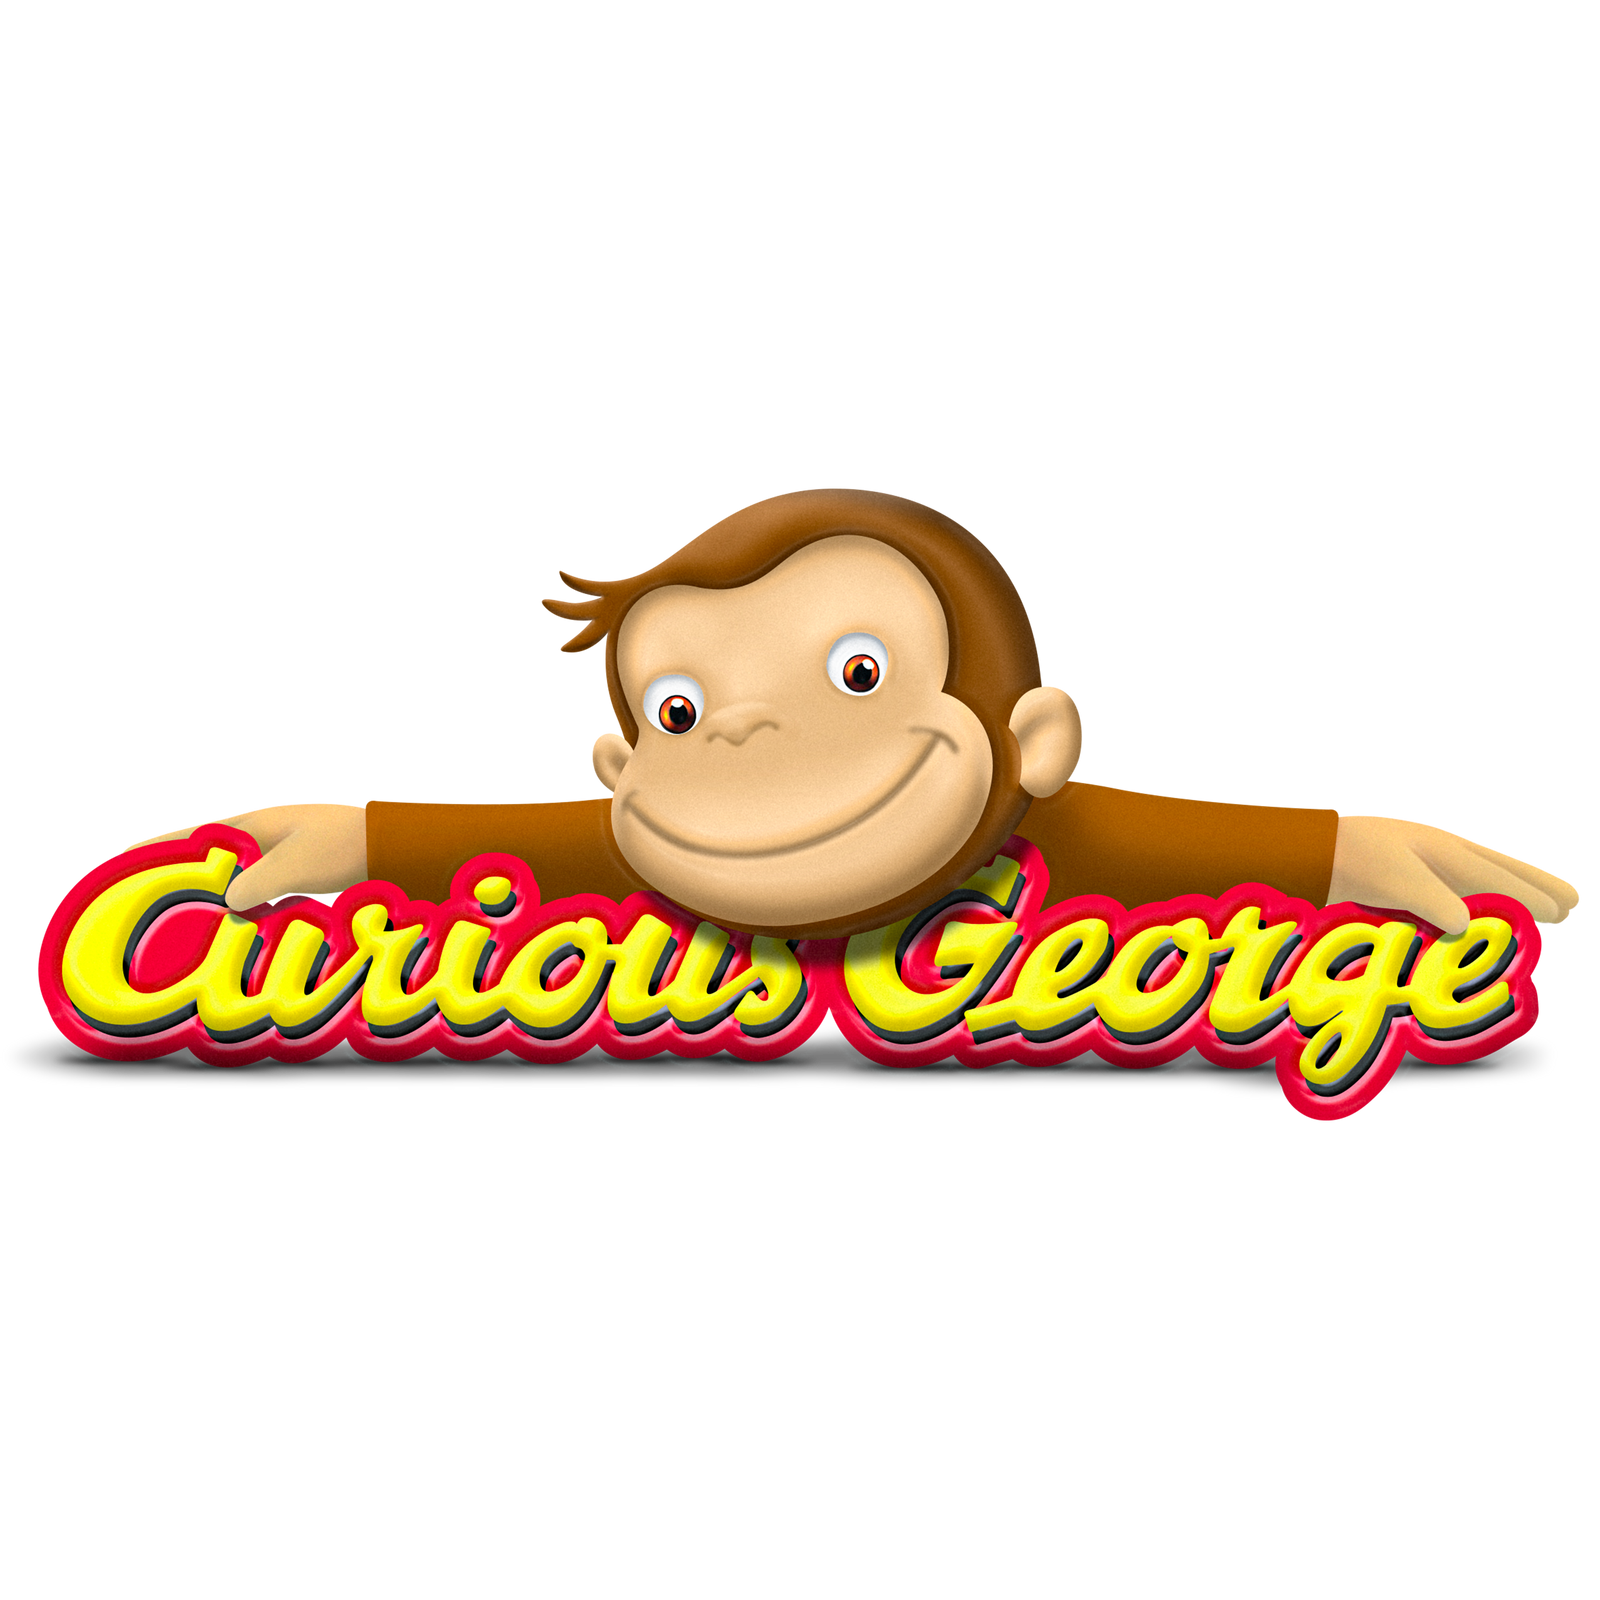 Curious George logo.